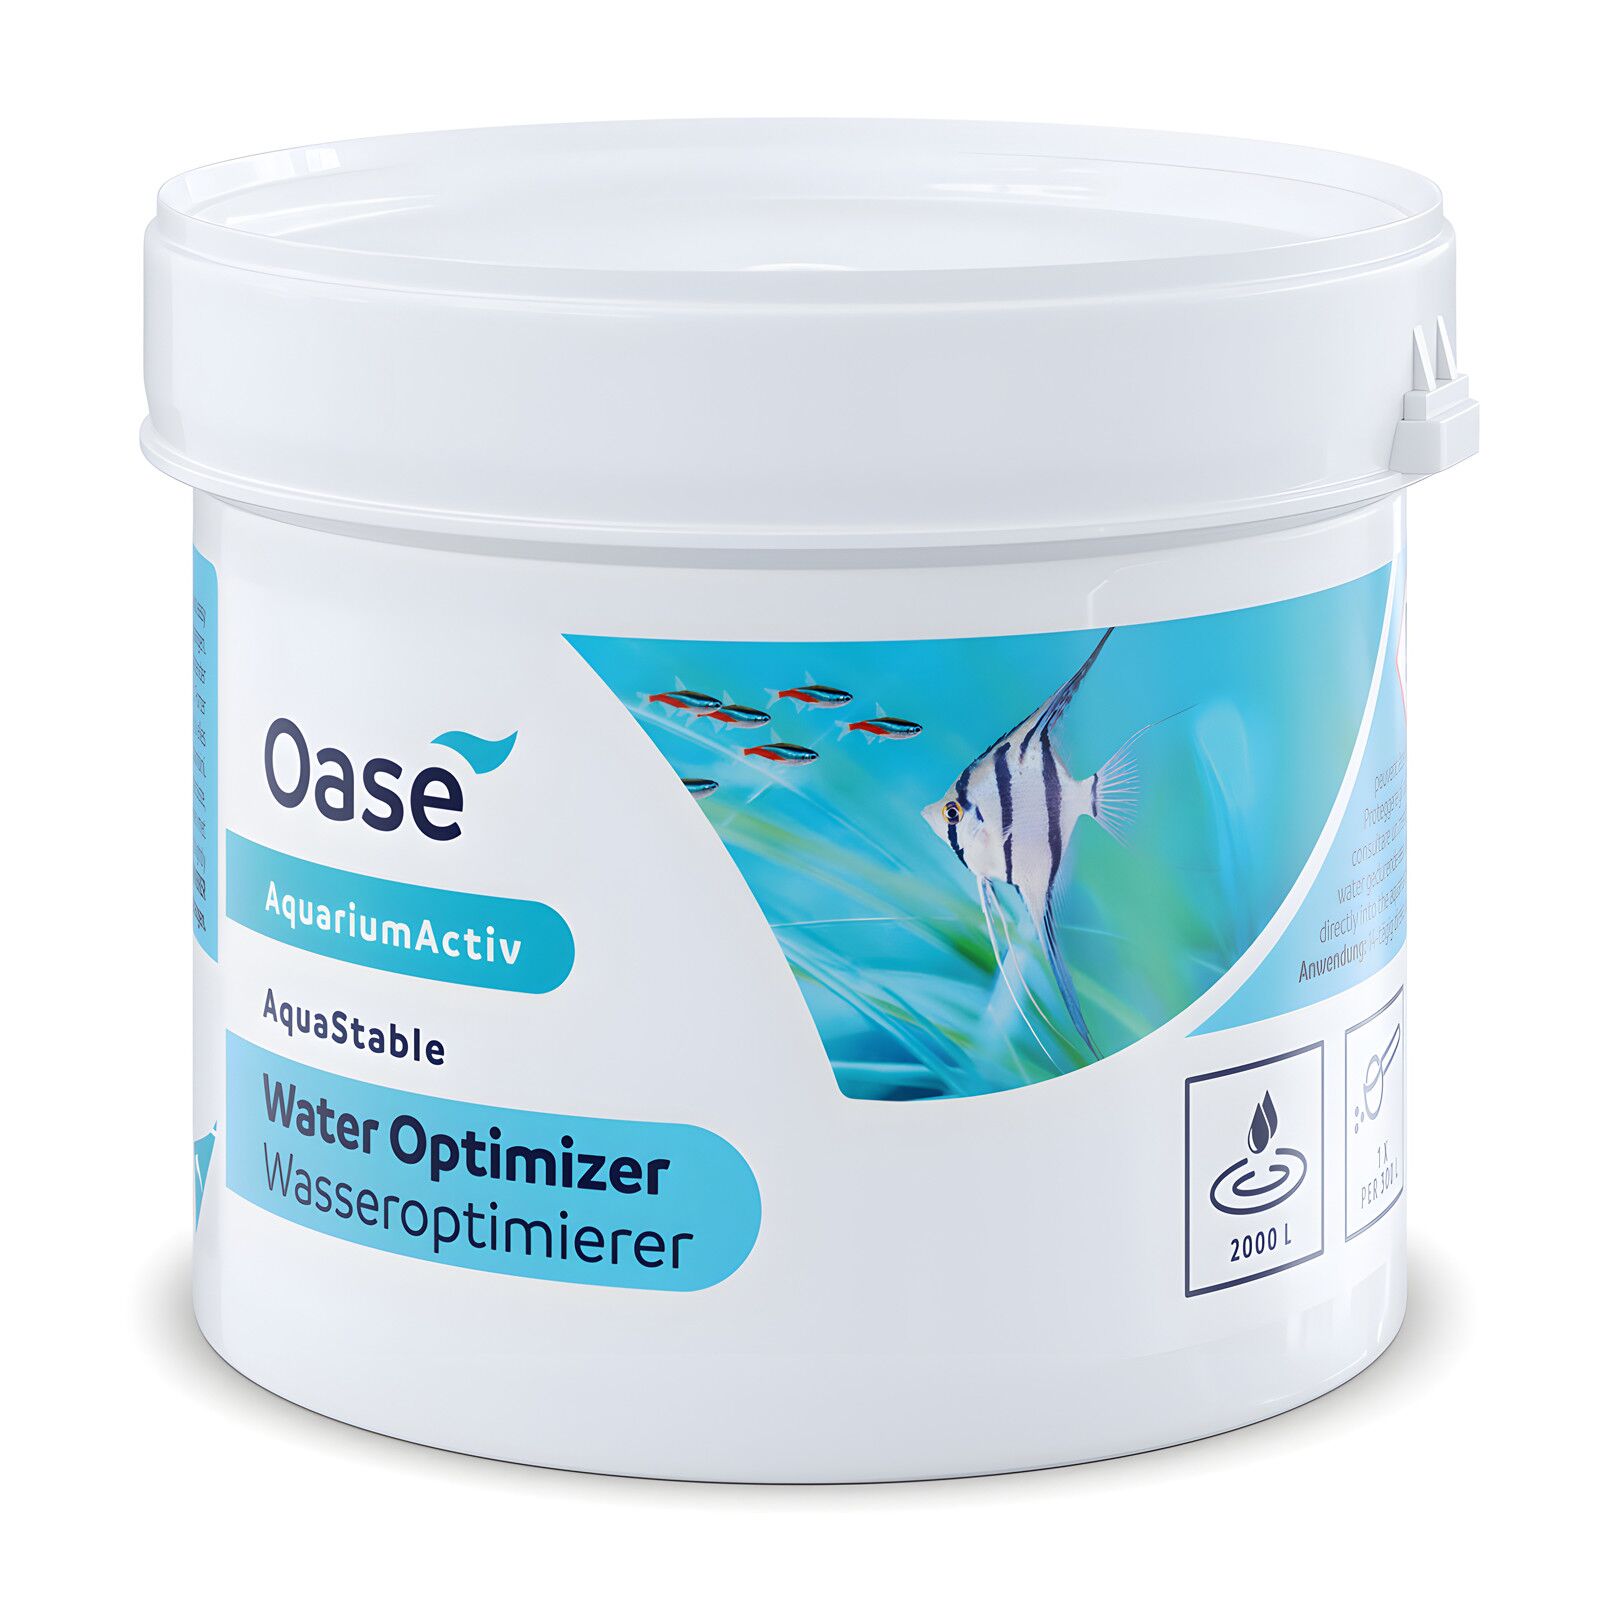 Oase - AquaStable Water Optimiser